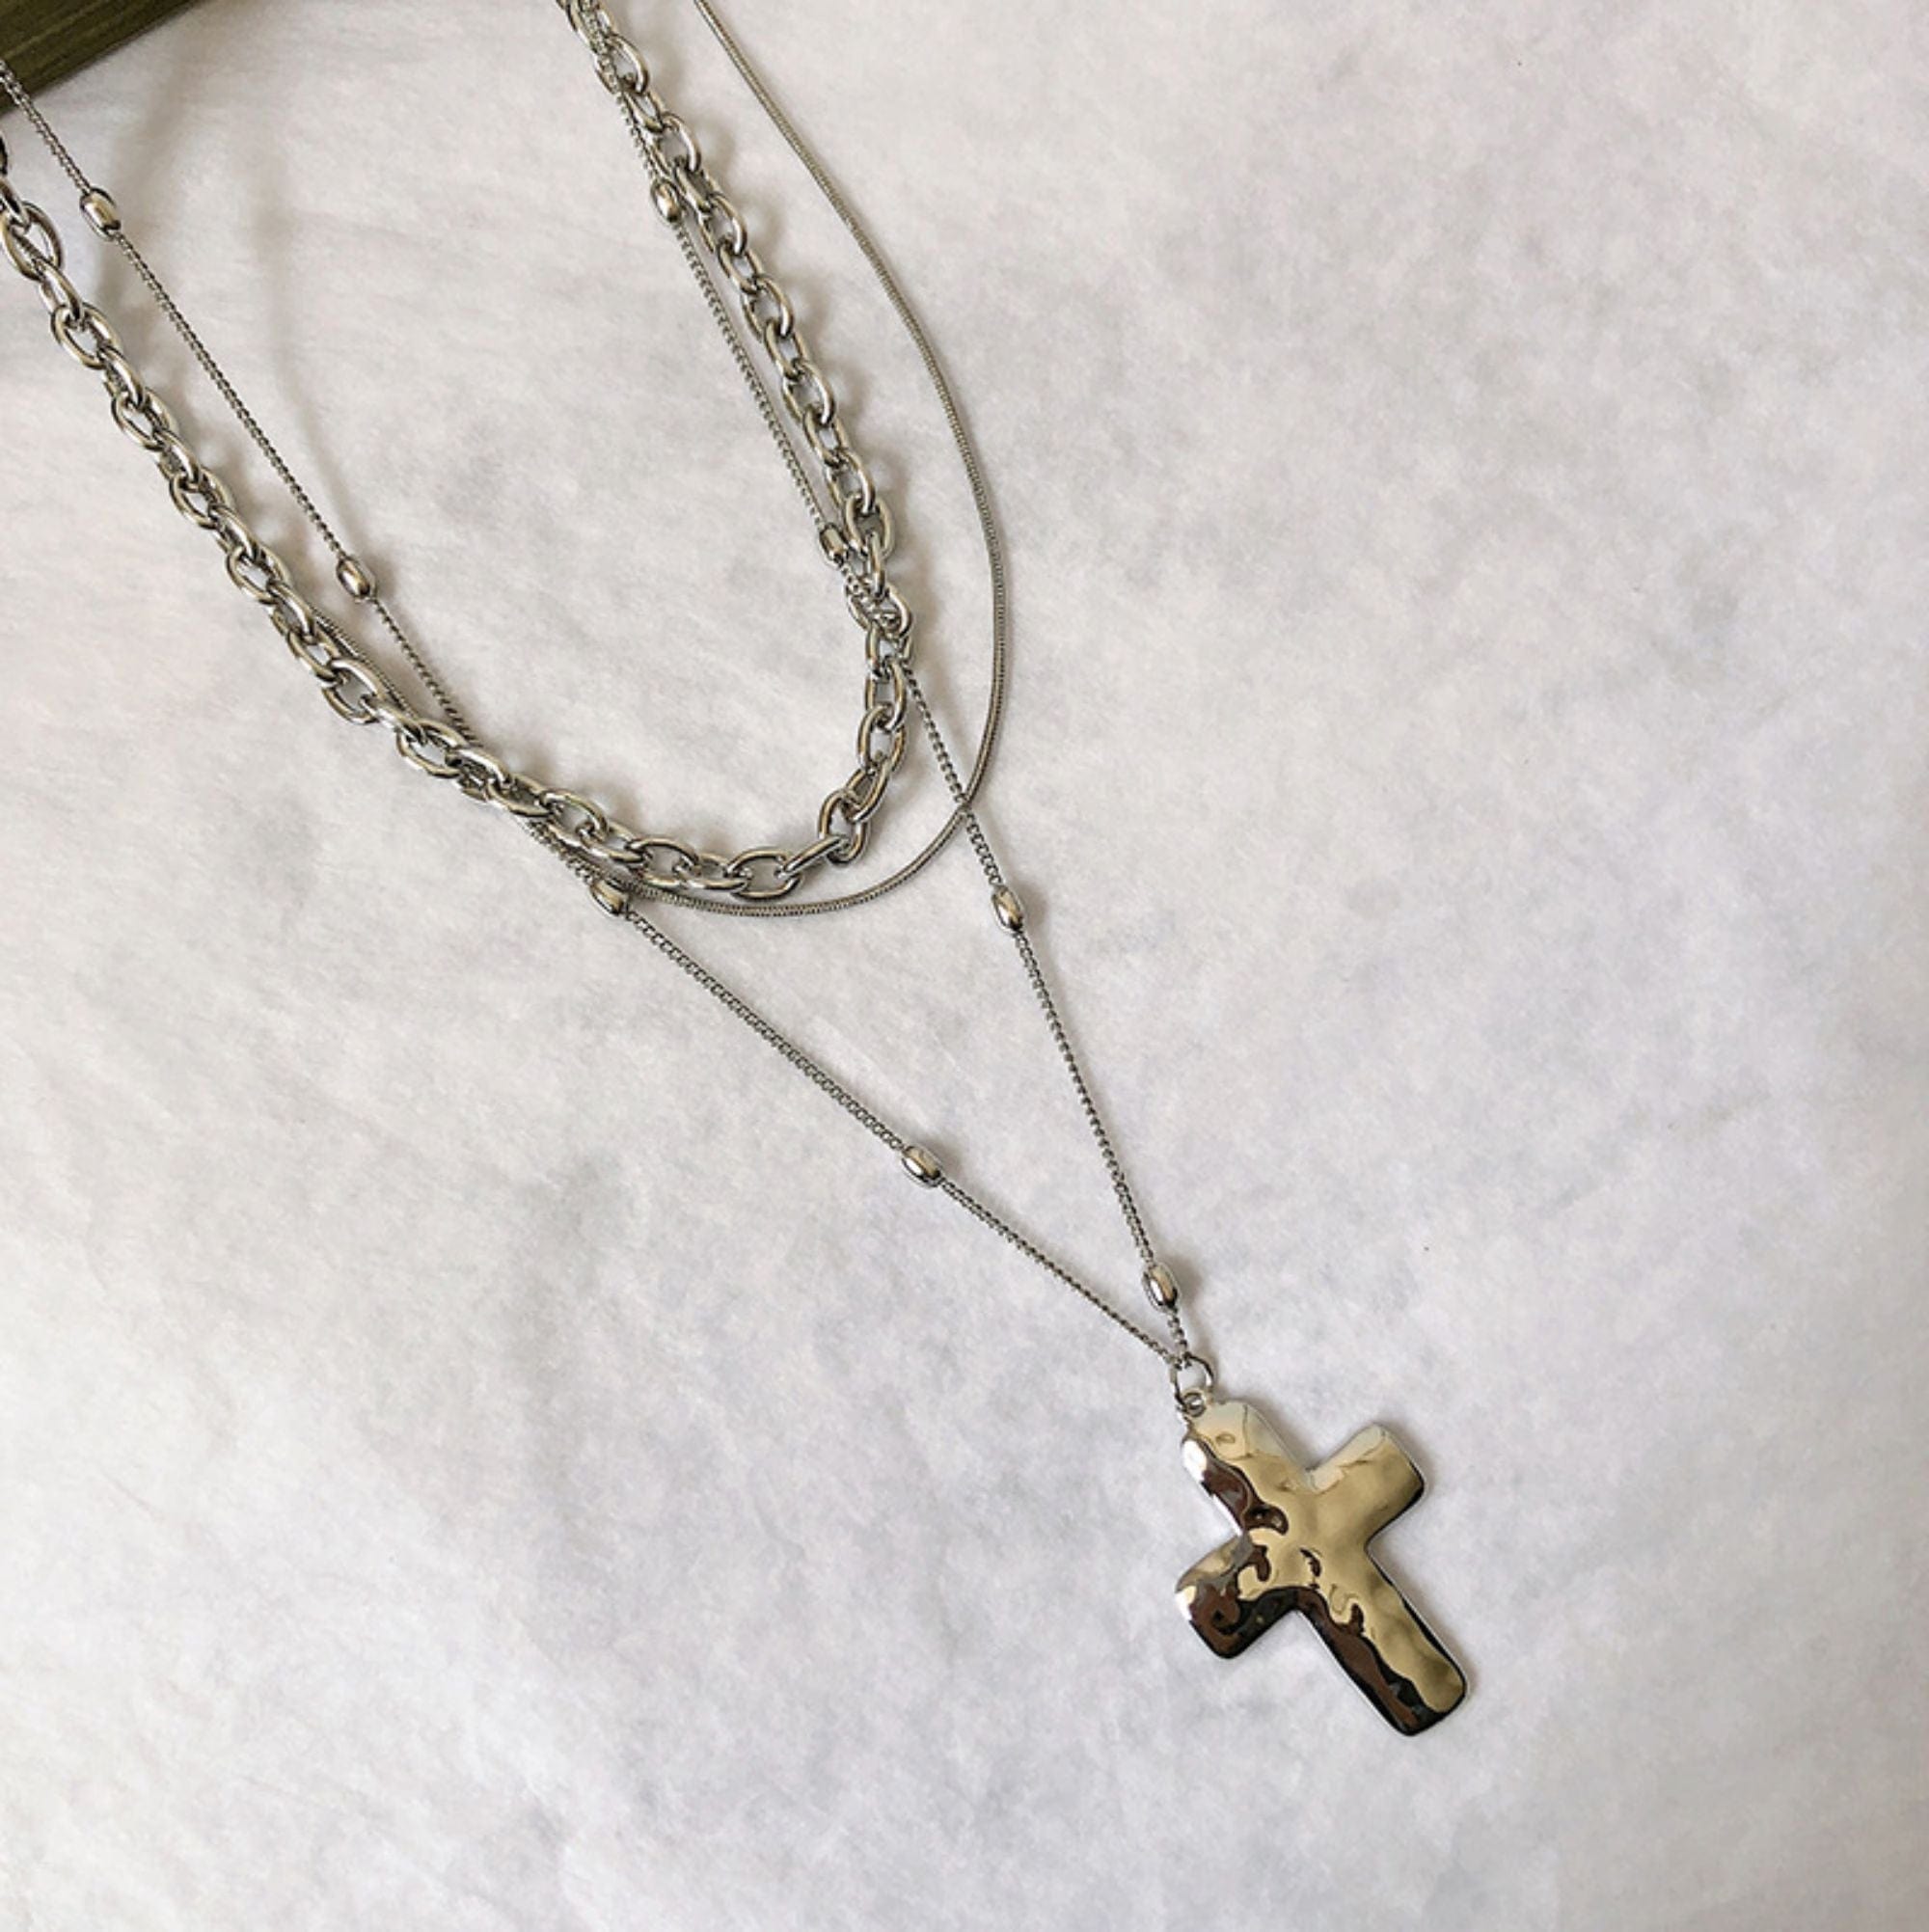 Chic Cross Layered Gold Choker Necklace - Mareevo